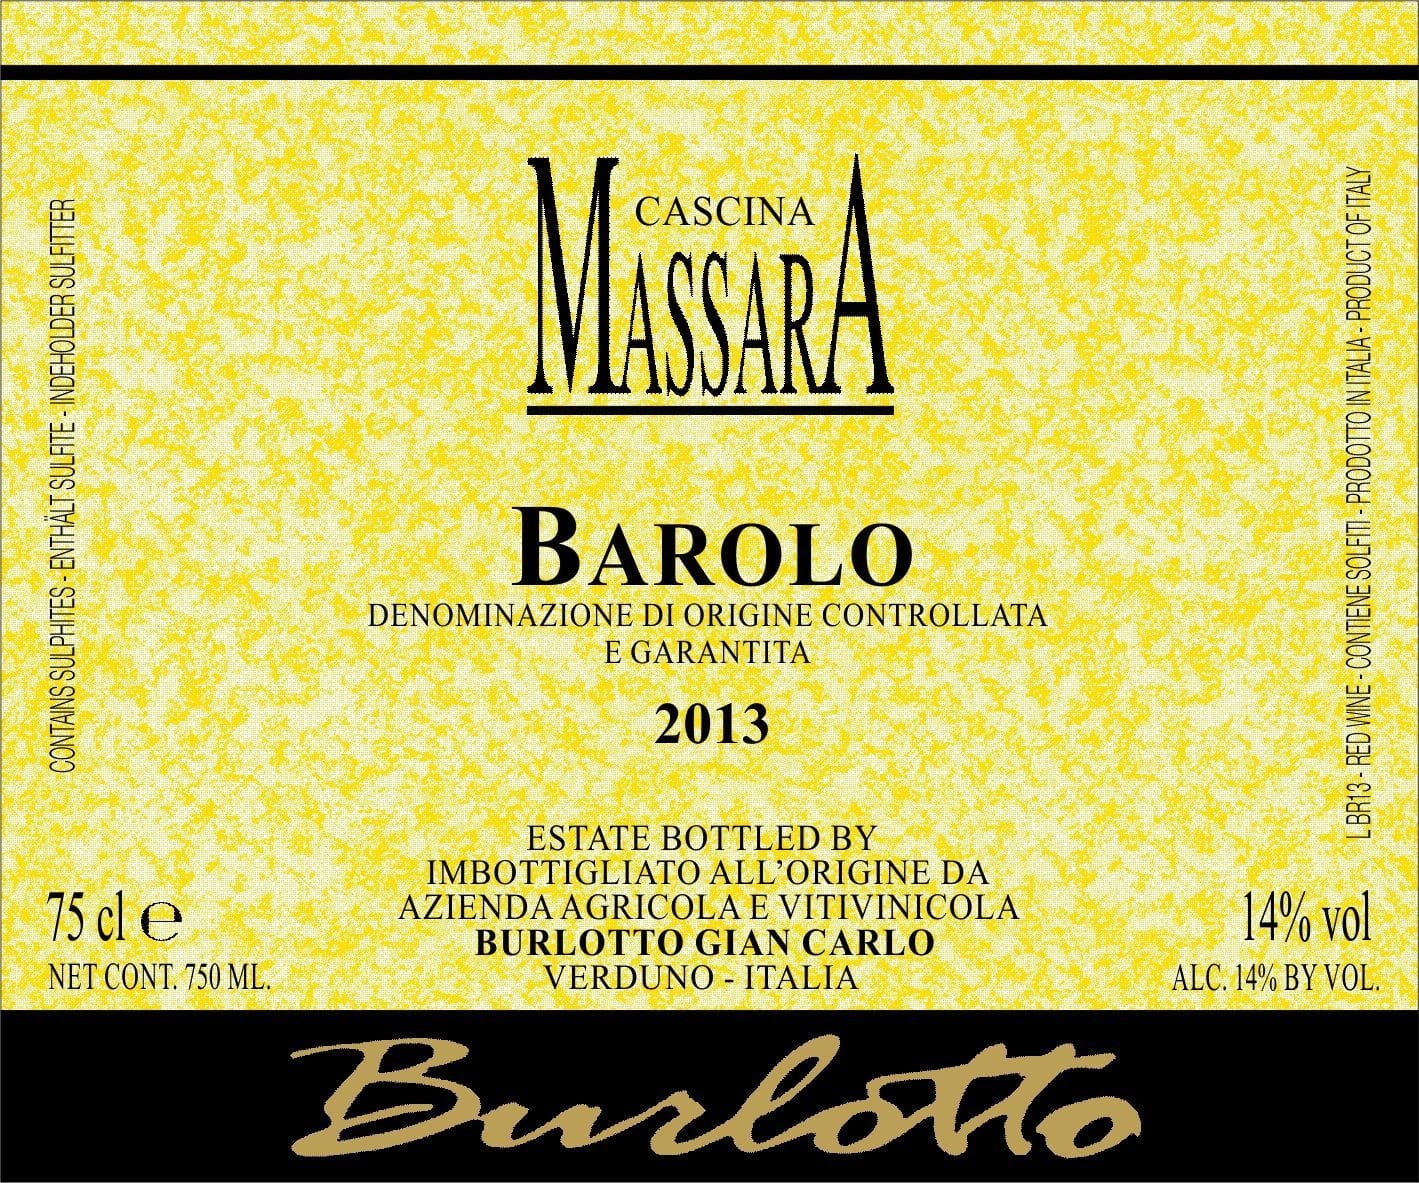 Massara Barolo front label